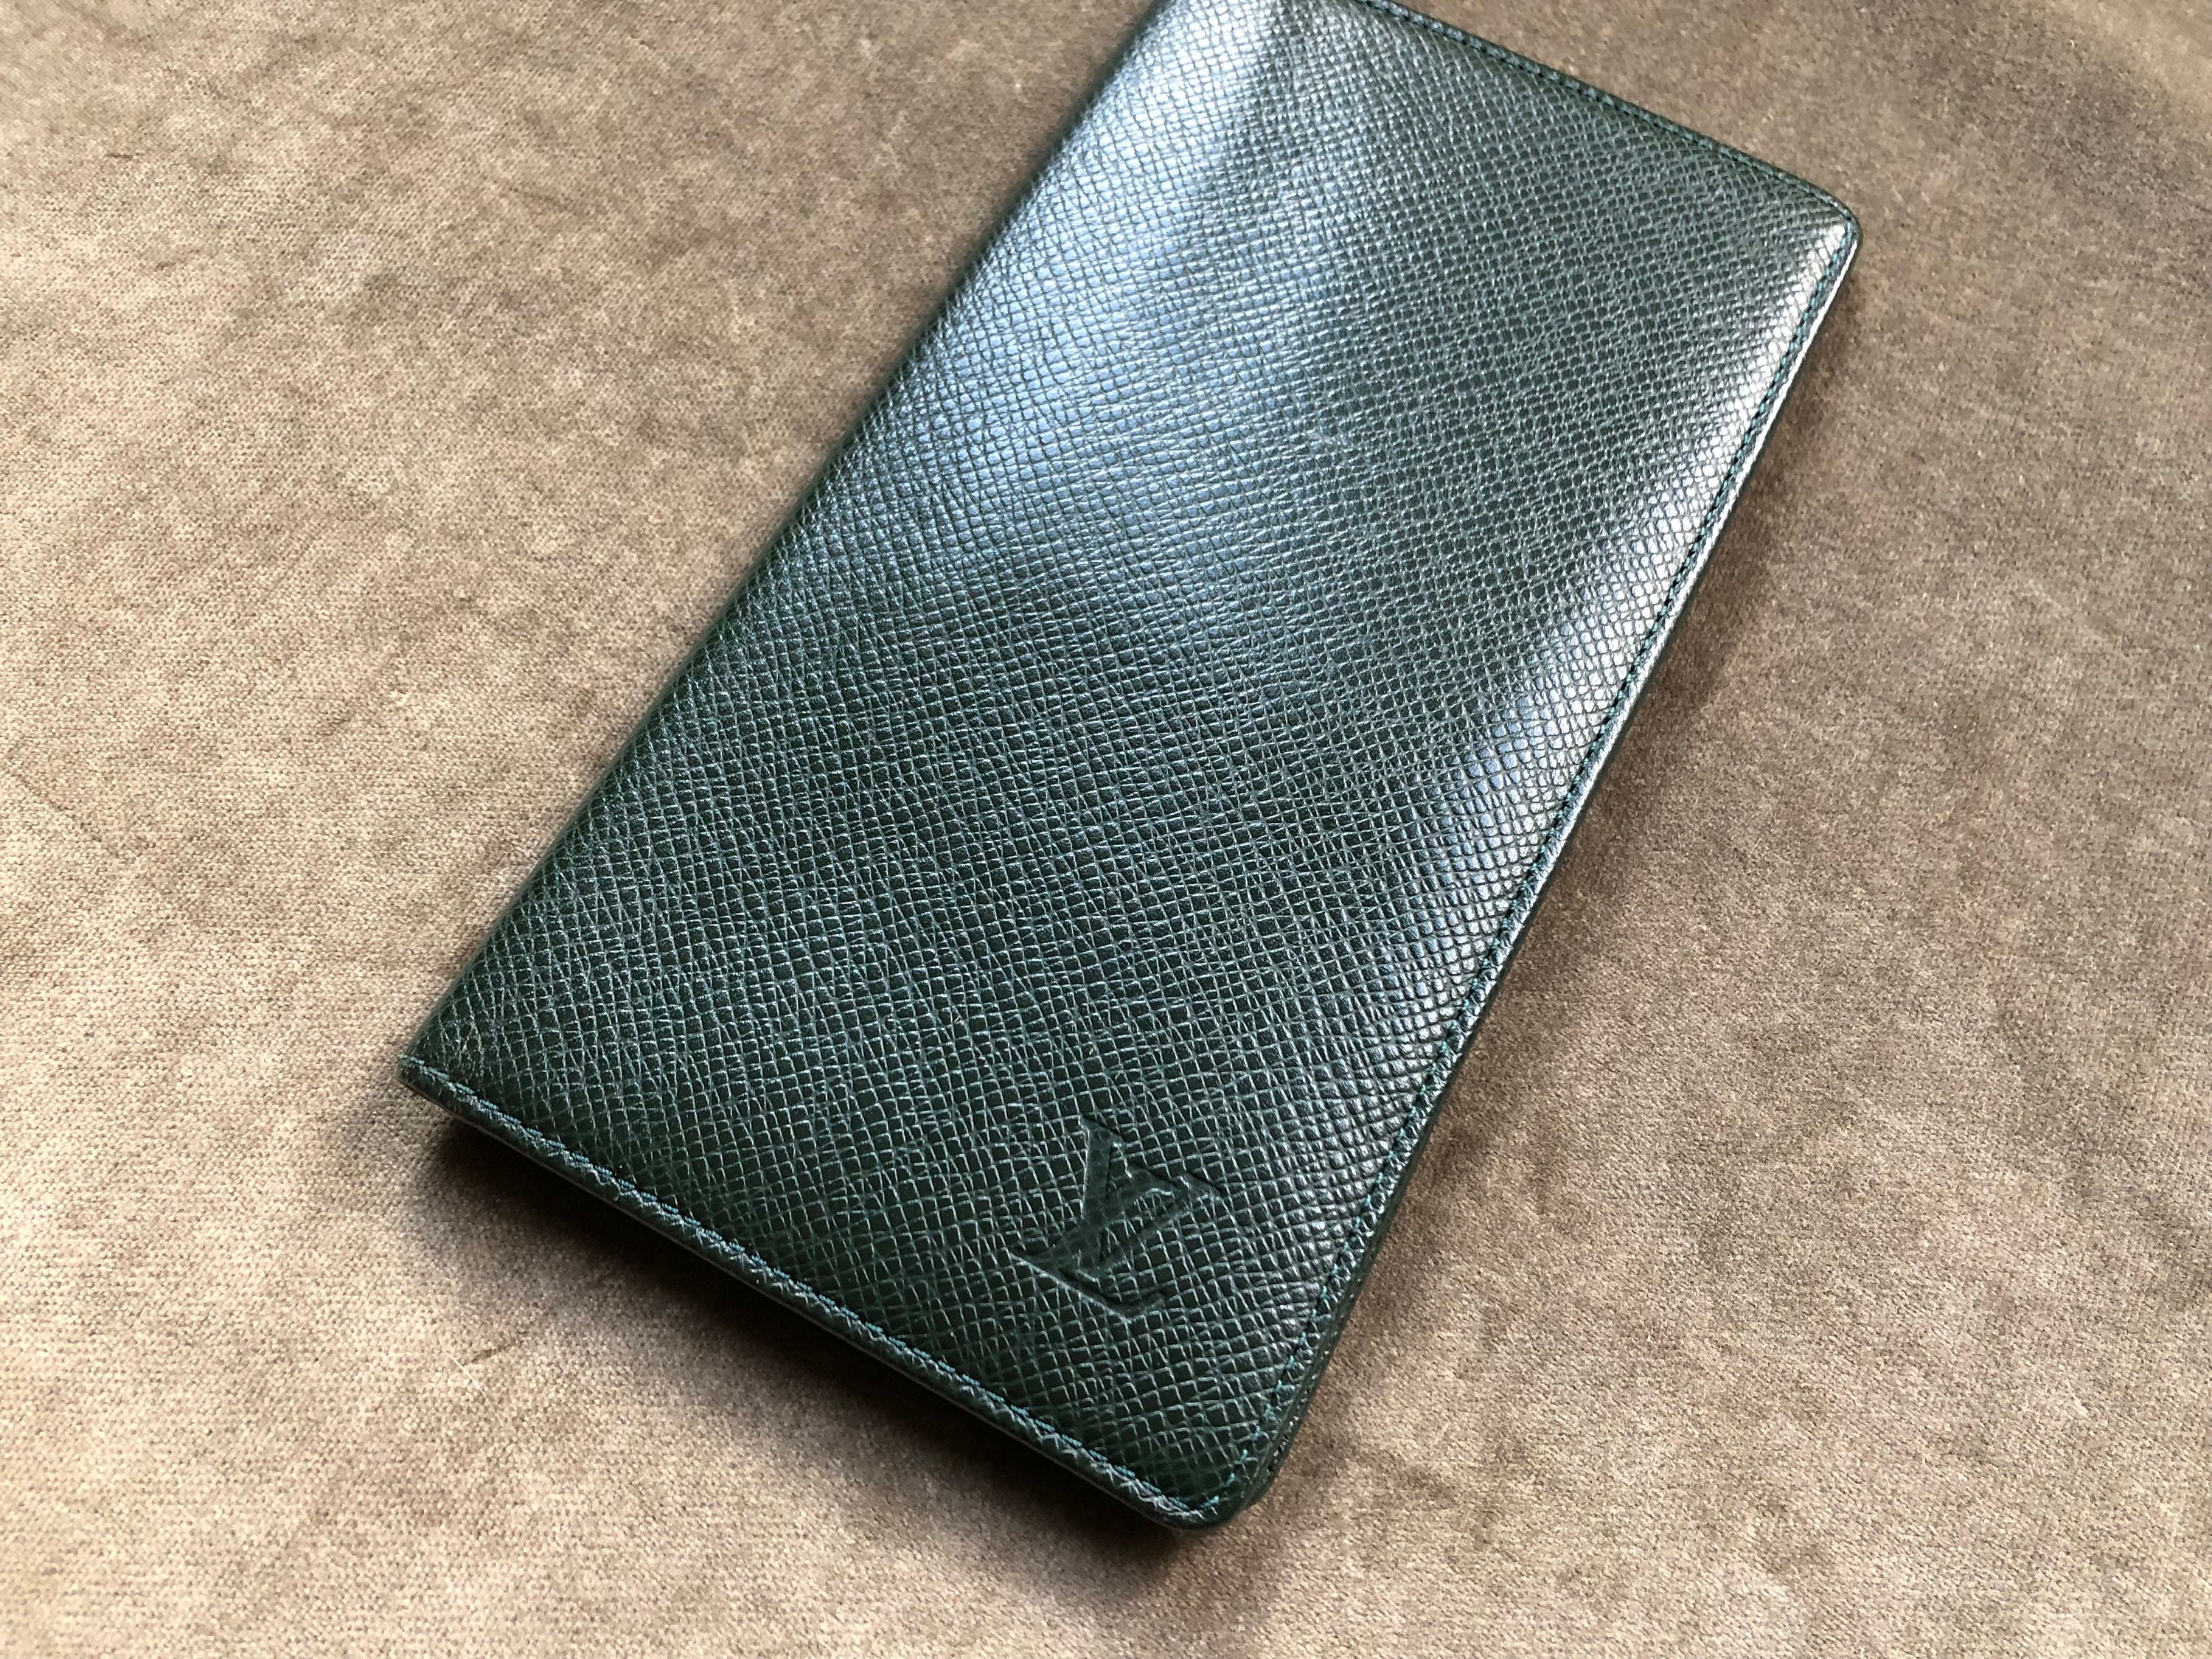 louis vitón original wallet for men